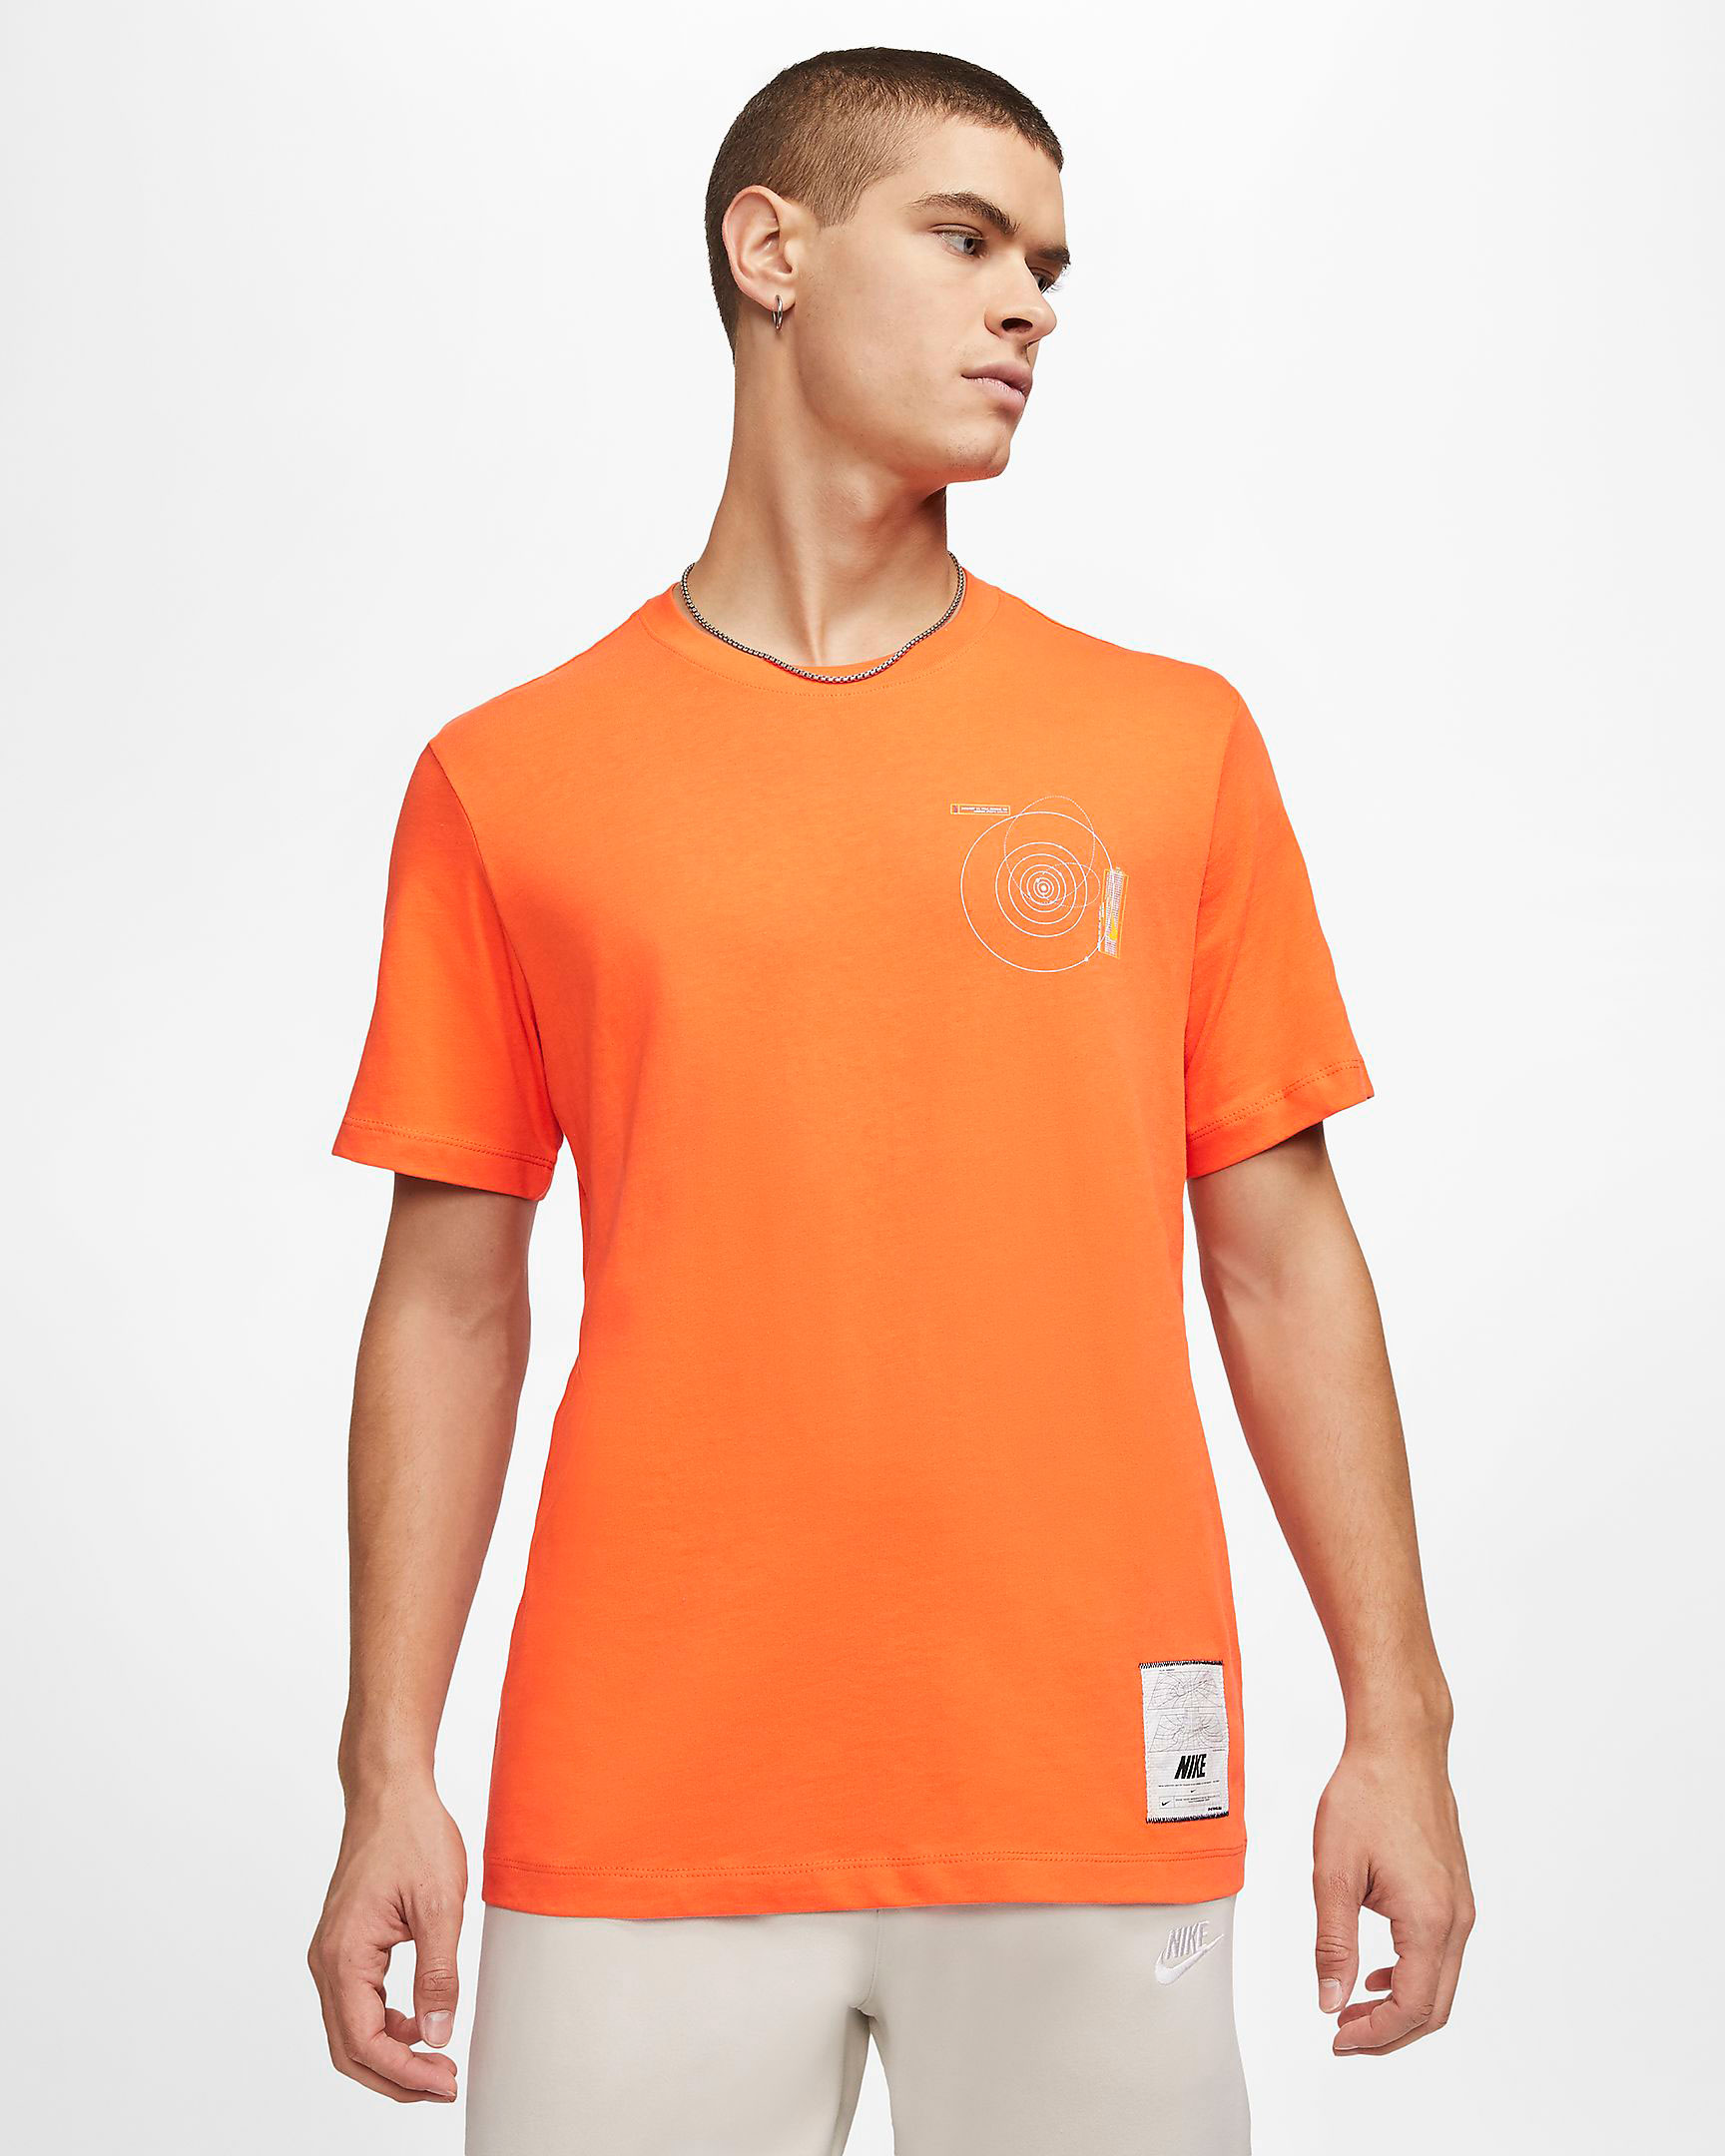 nike-air-foamposite-one-rugged-orange-matching-tee-shirt-1